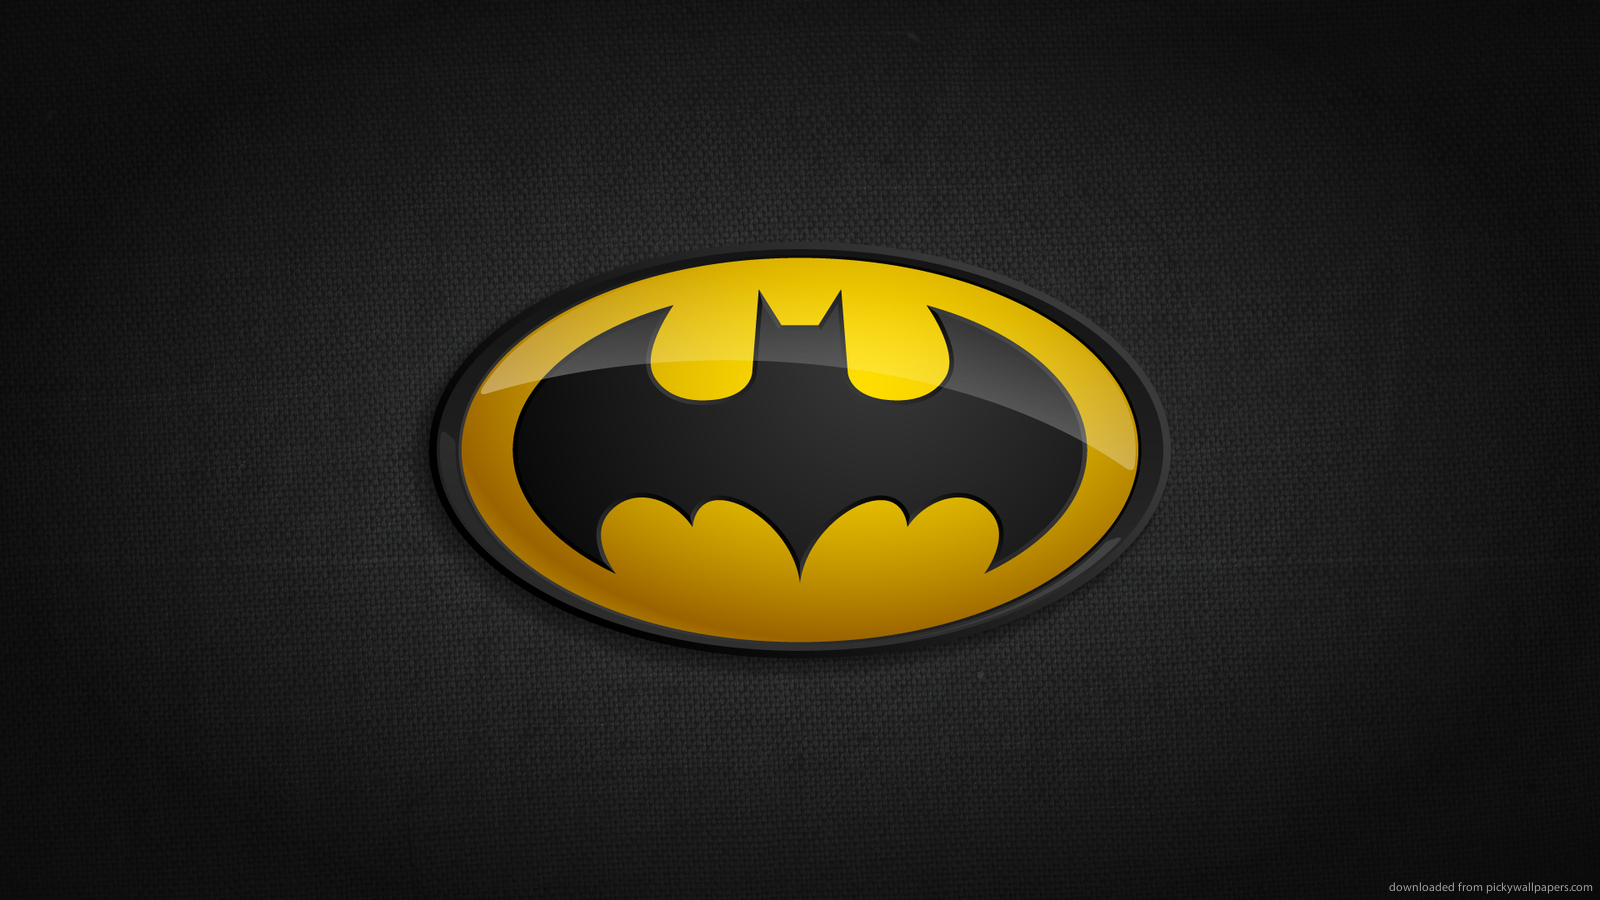 Superheroes Logos Wallpaper Batman classic logo for